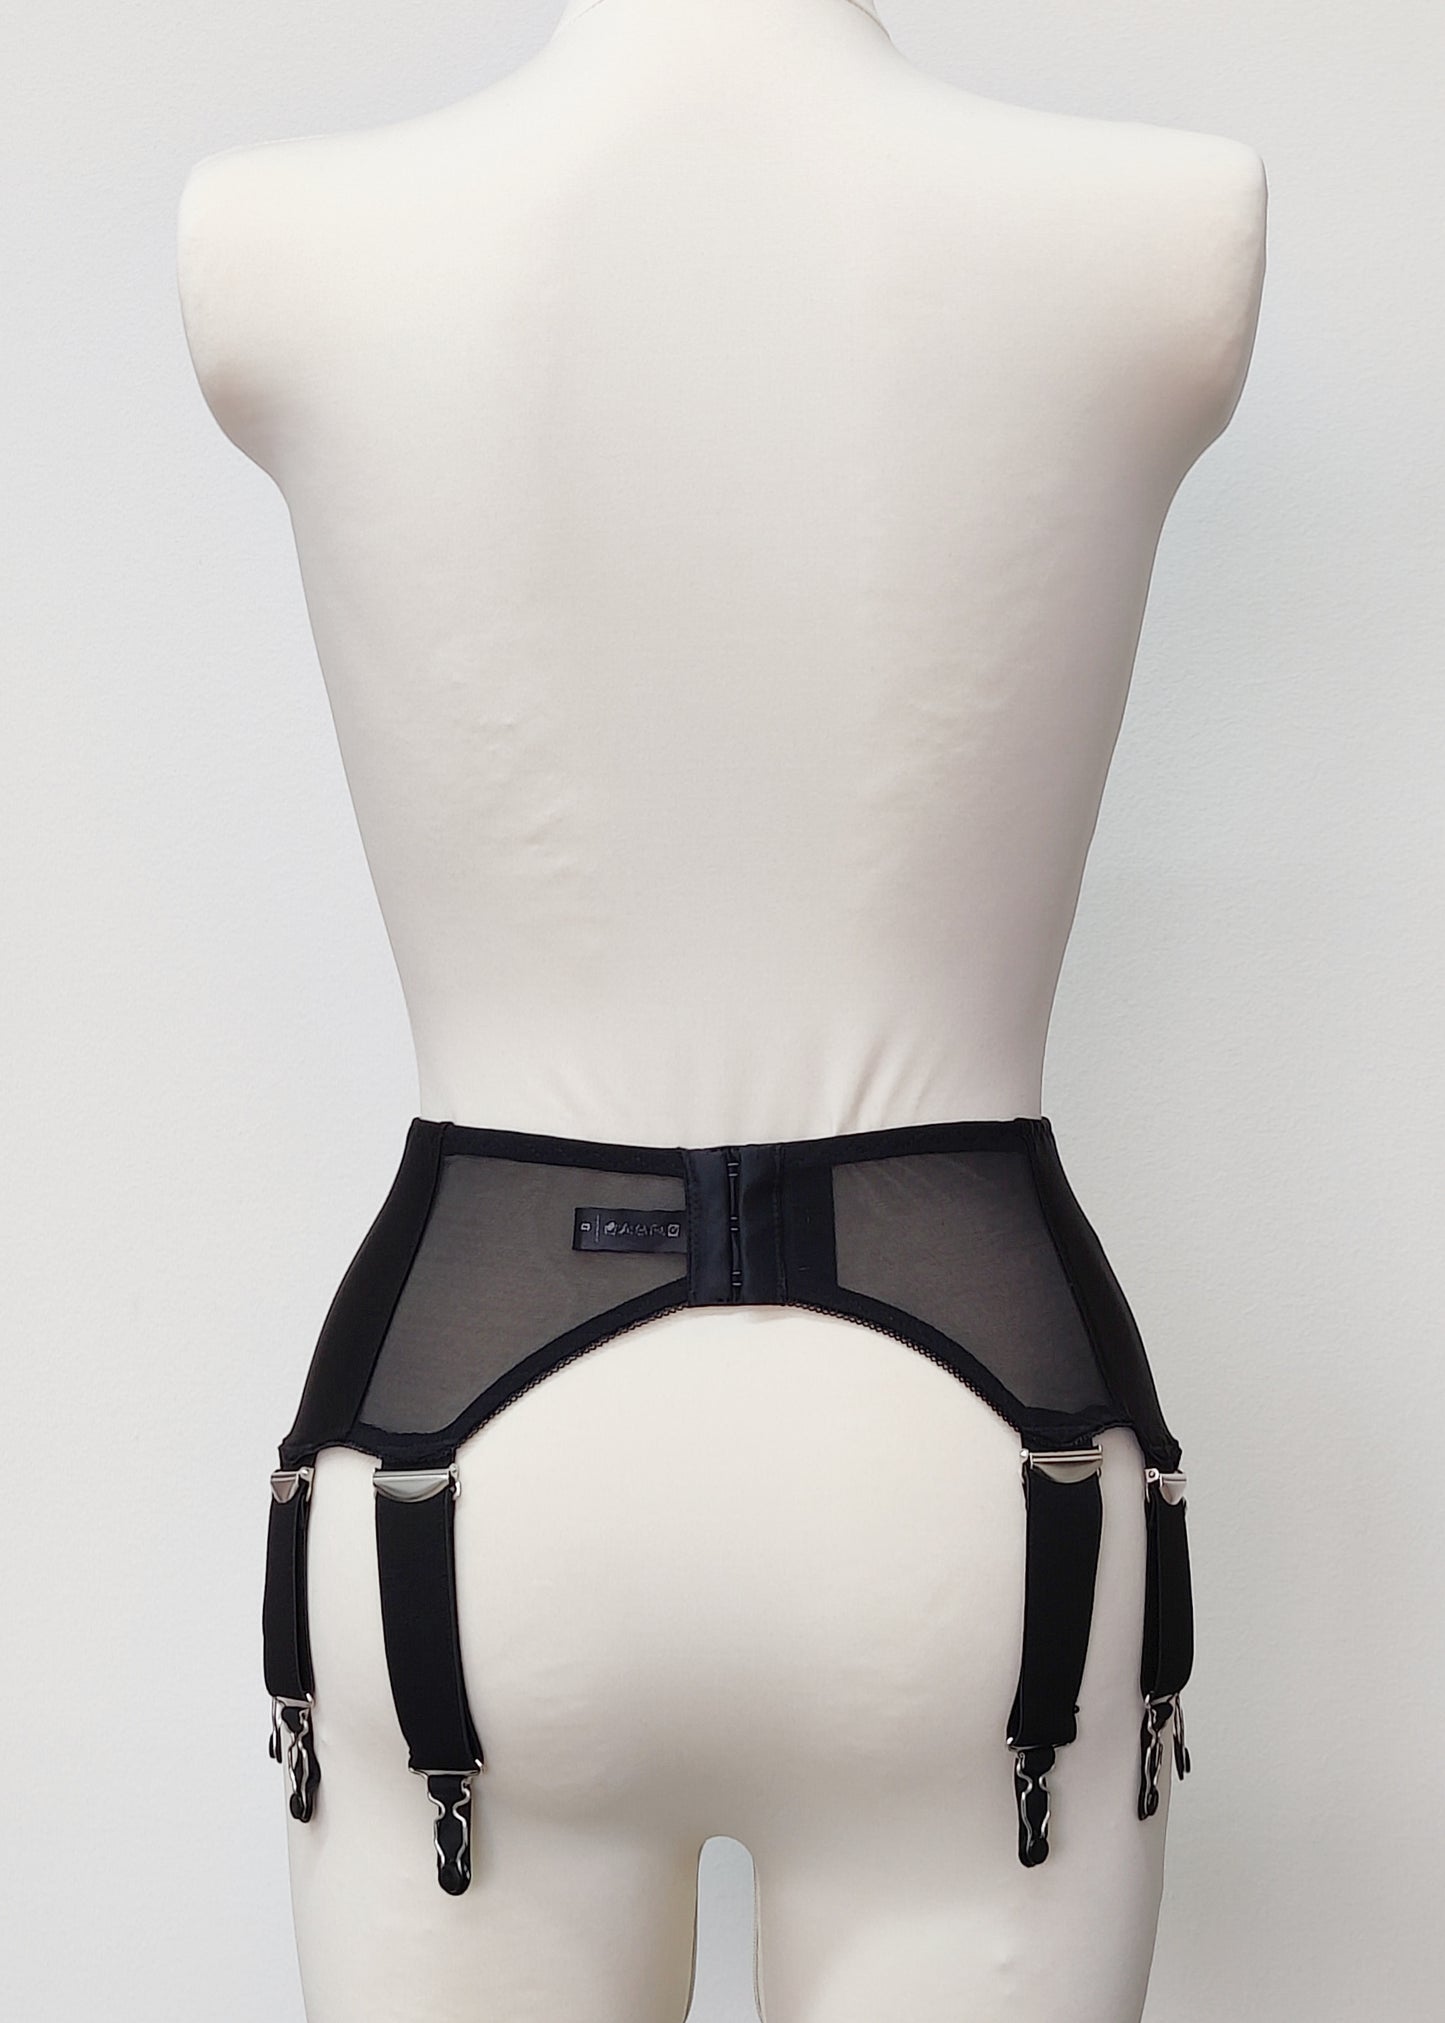 GRACE Wide Garter belt in Black and White Size XS-3XL